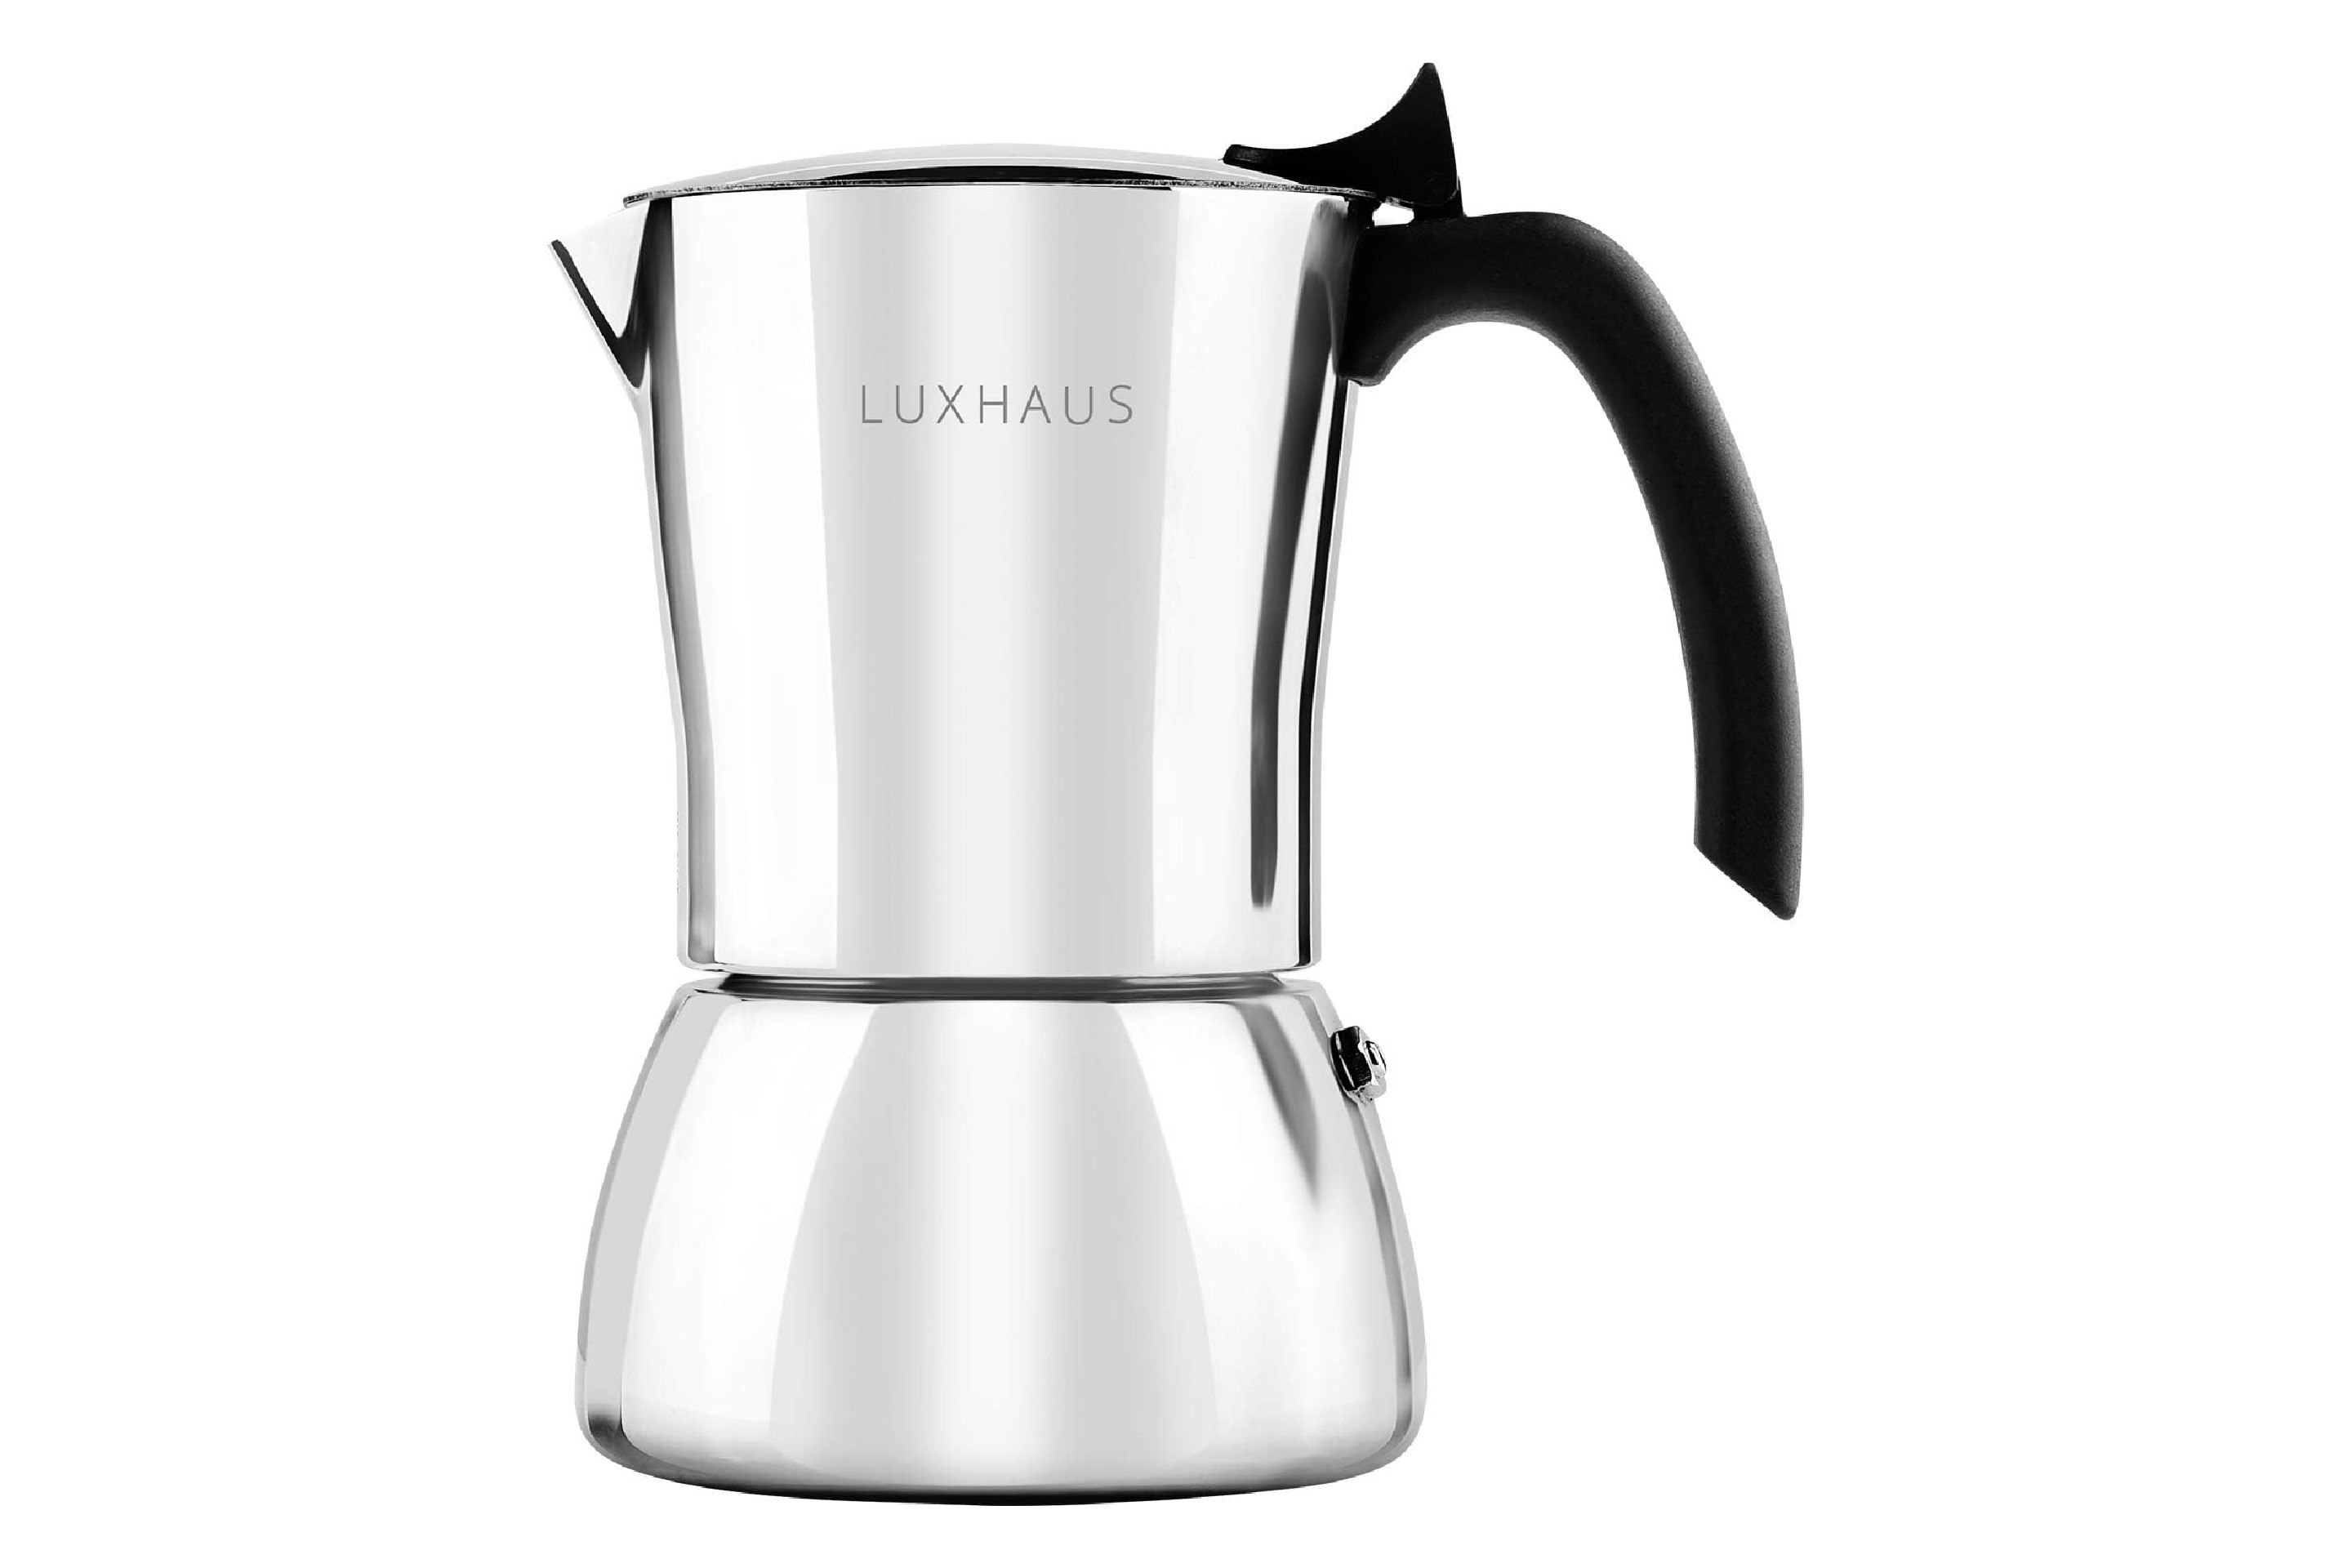 LUXHAUS Moka Pot - 6 Cup Stovetop Espresso Maker